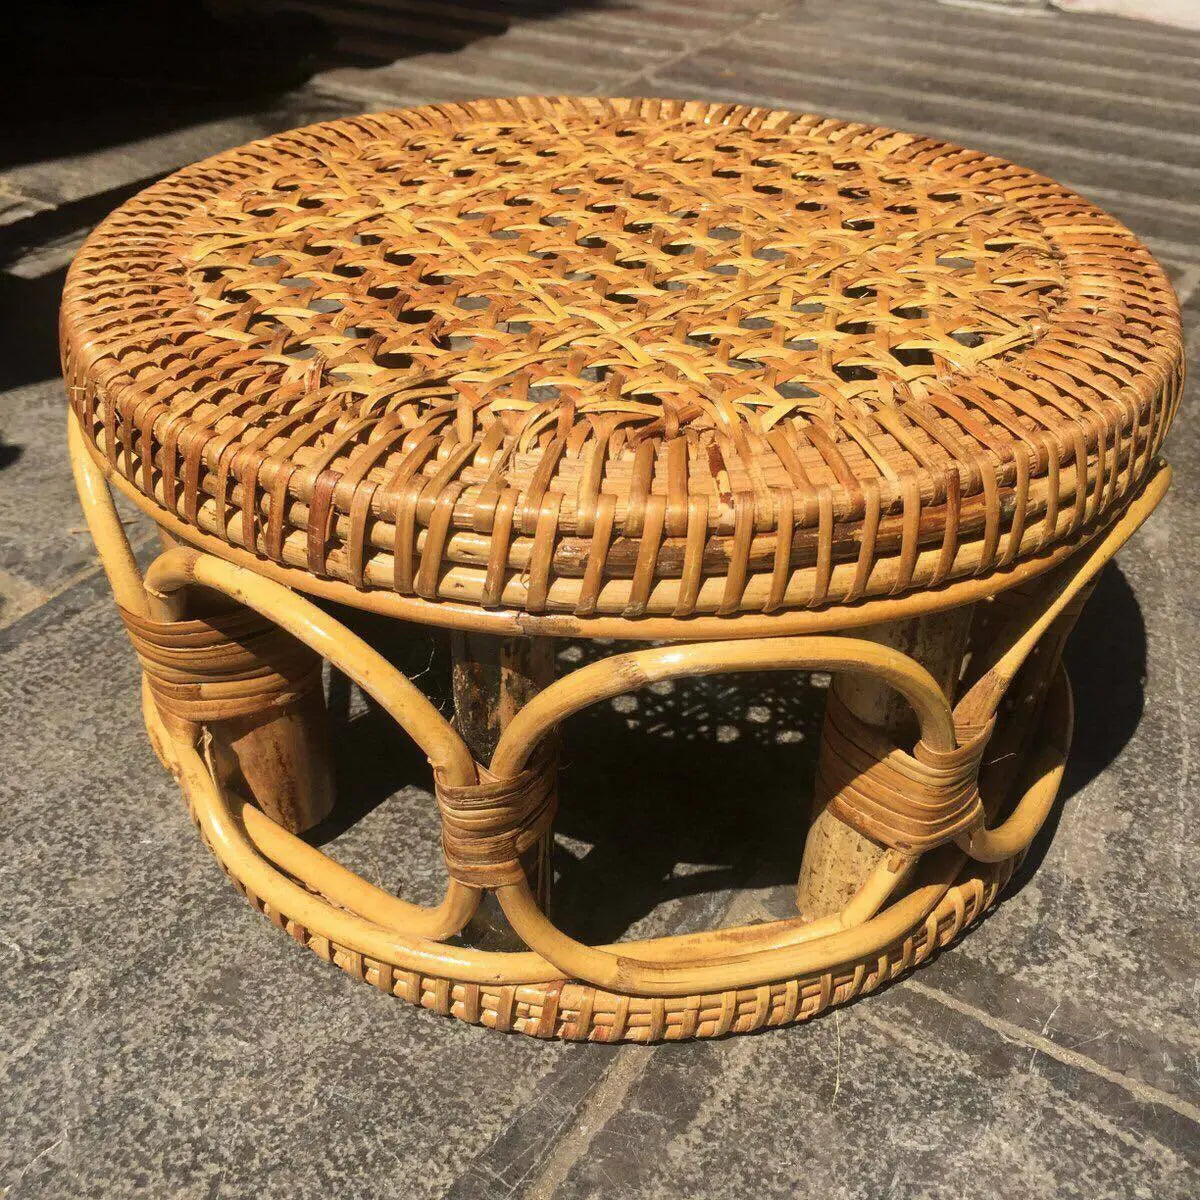 Bamboo Rattan Stool Handwoven Handmade Vintage Stool Ottoman Plant Stand Artwork Home Decor everythingbamboo